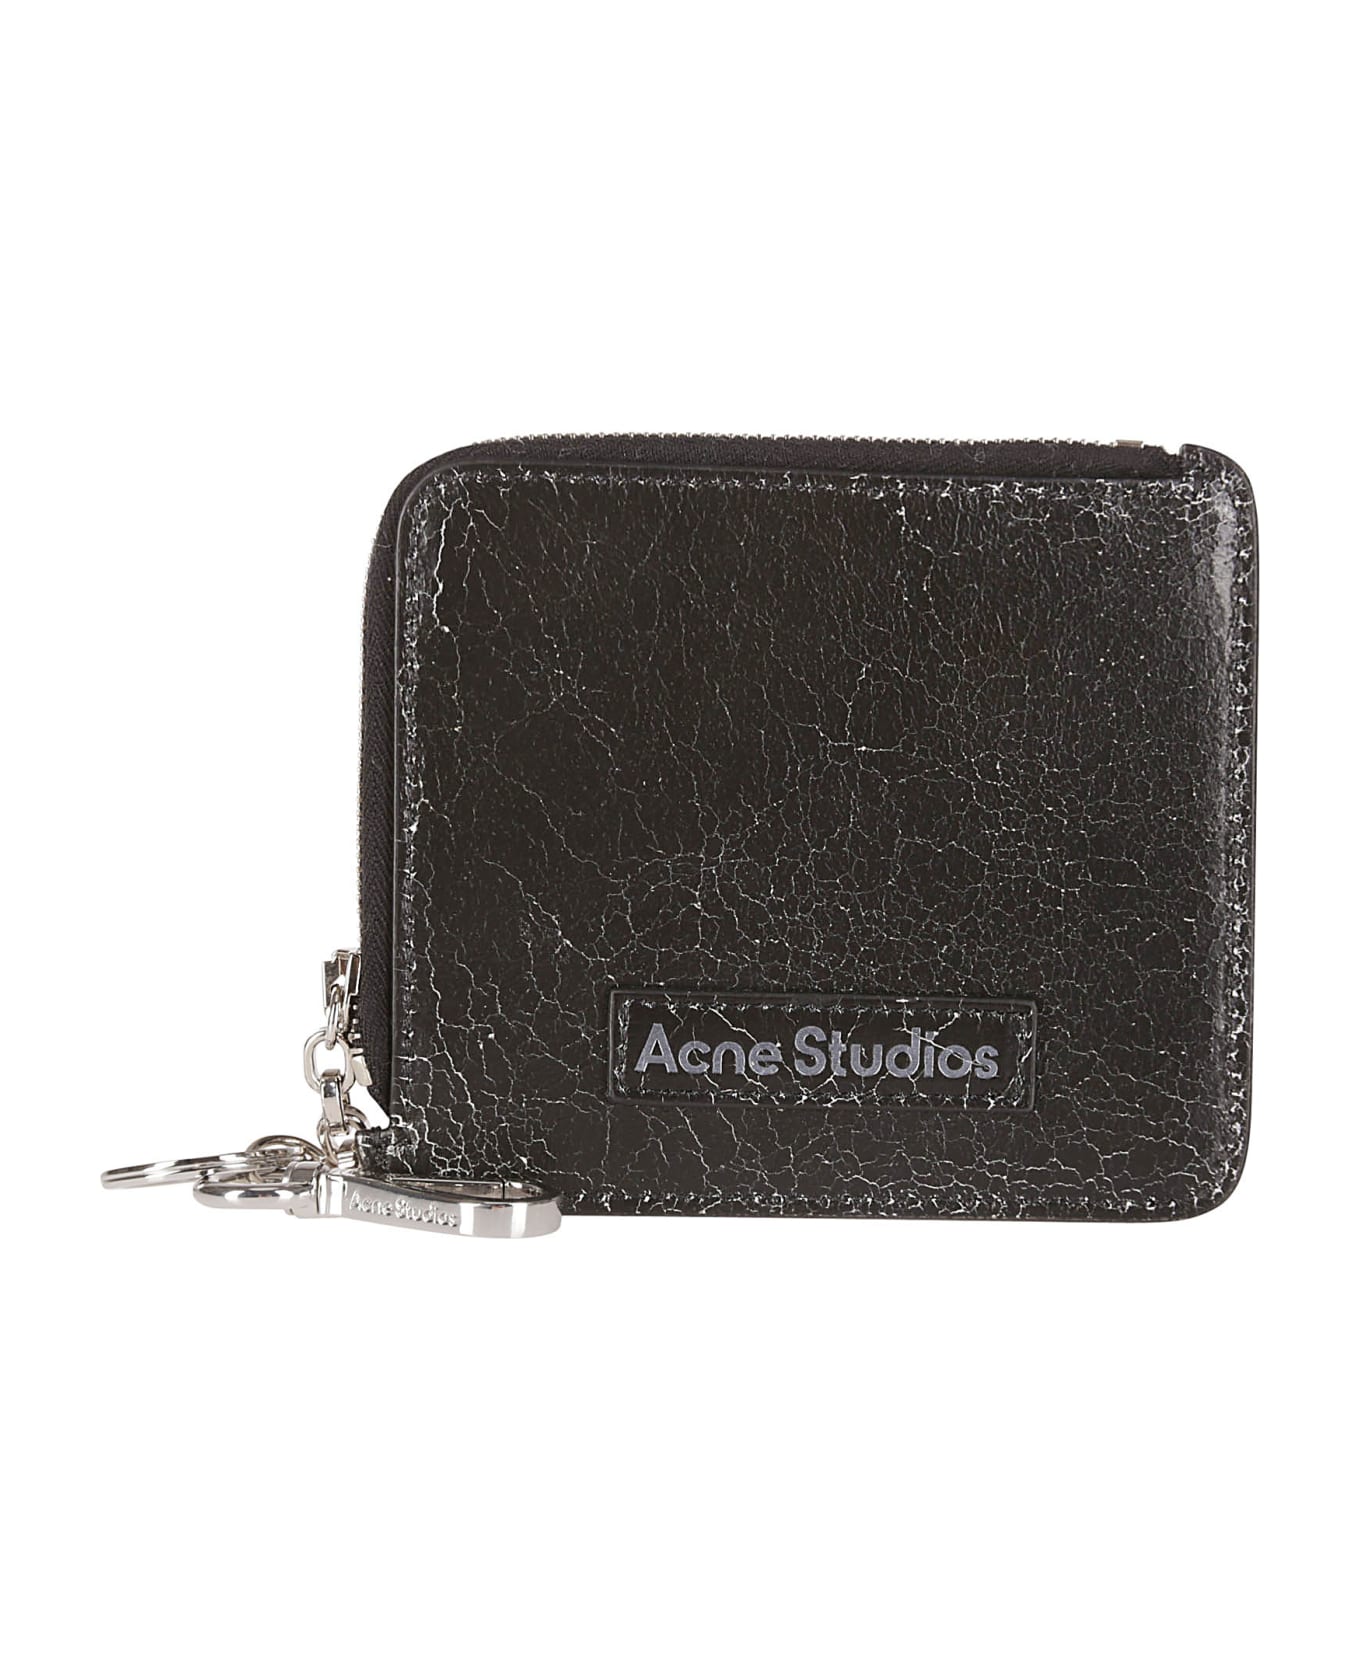 Acne Studios Fnuxslgs000273 - BLACK